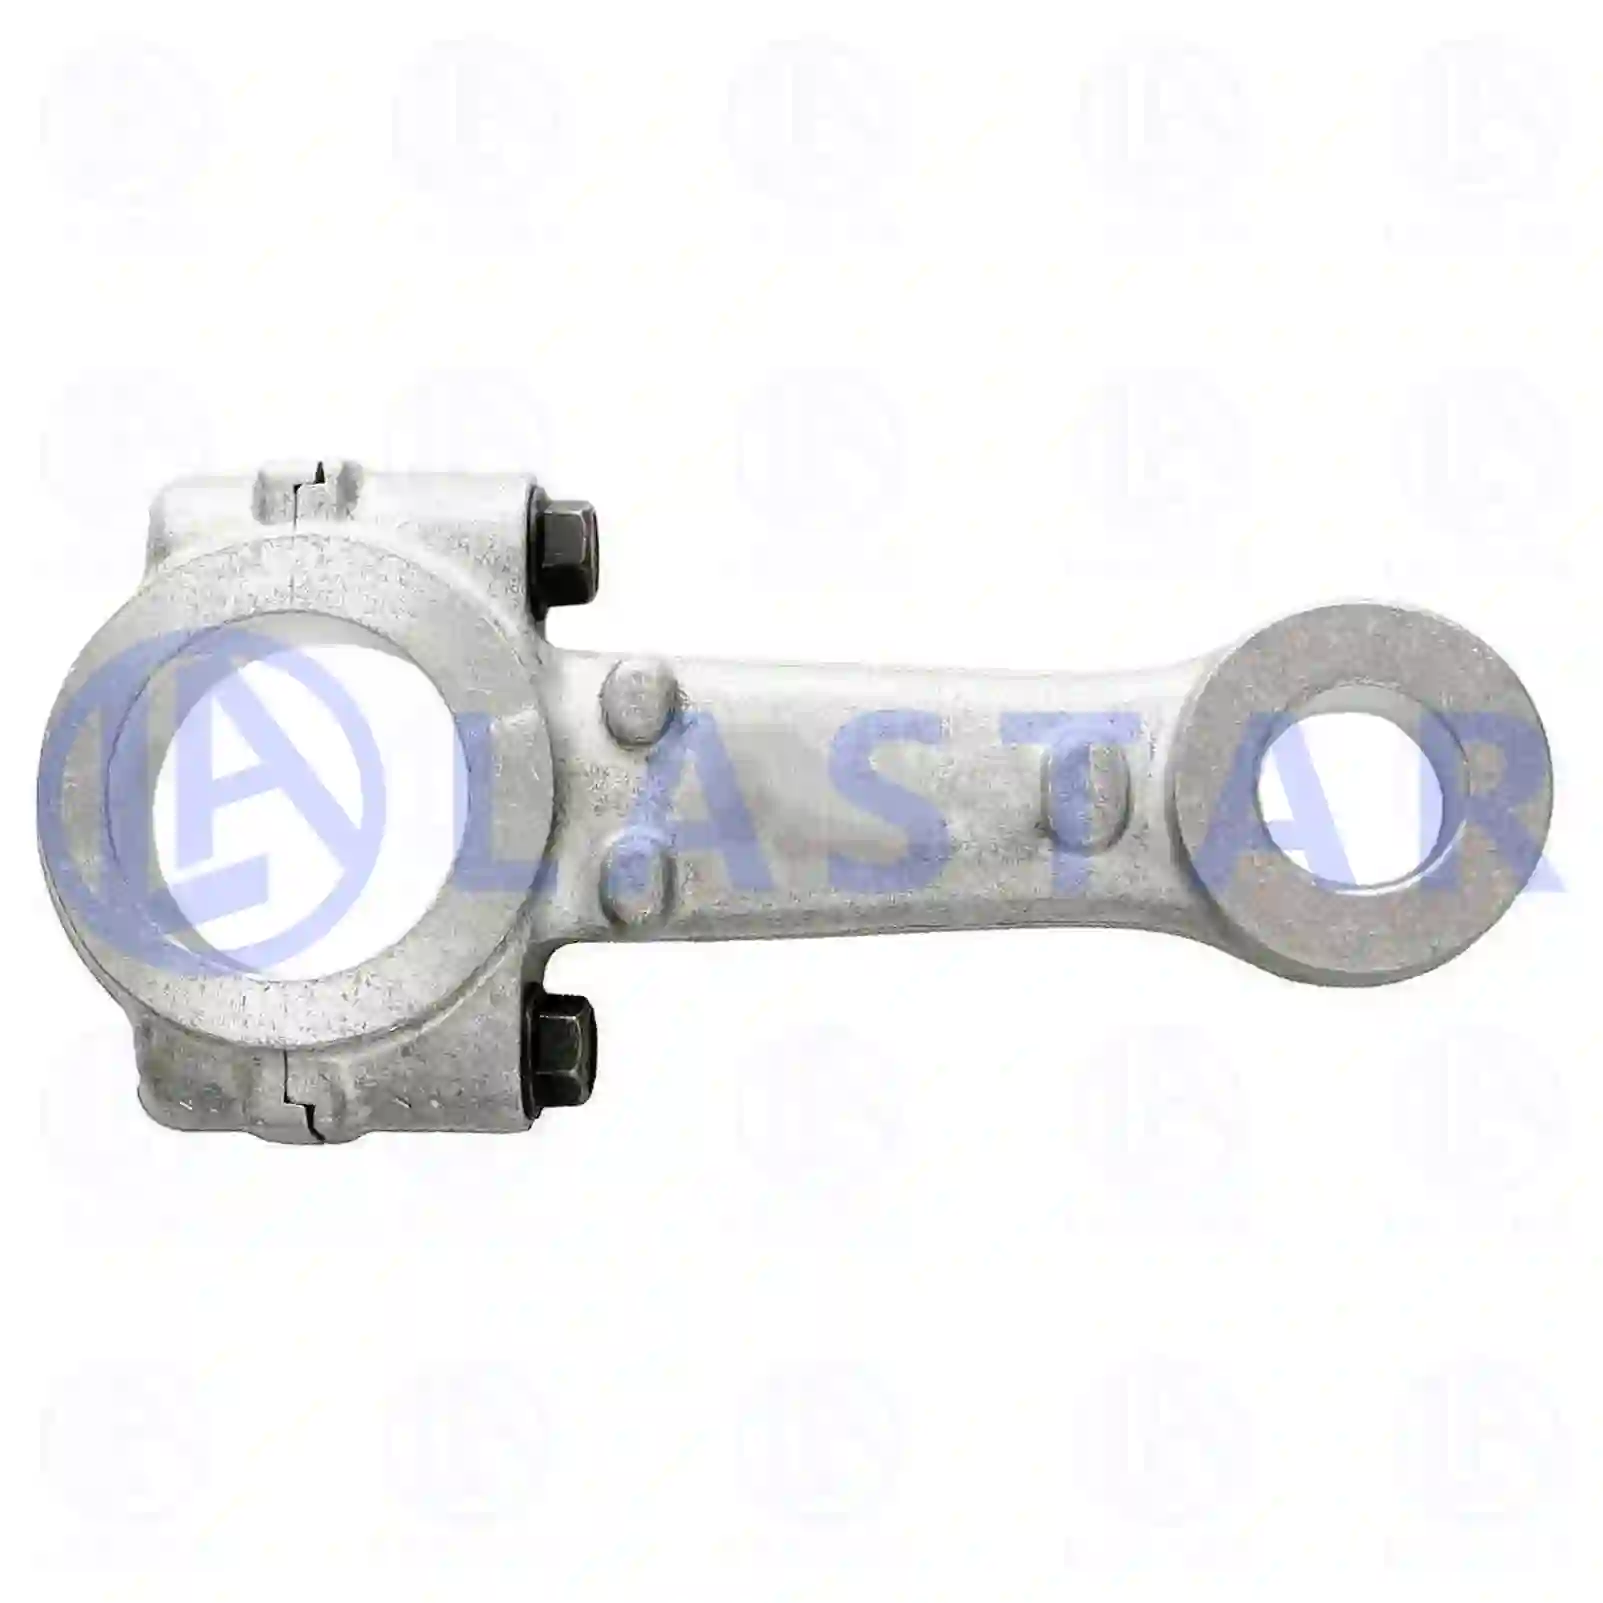  Connecting rod, compressor || Lastar Spare Part | Truck Spare Parts, Auotomotive Spare Parts